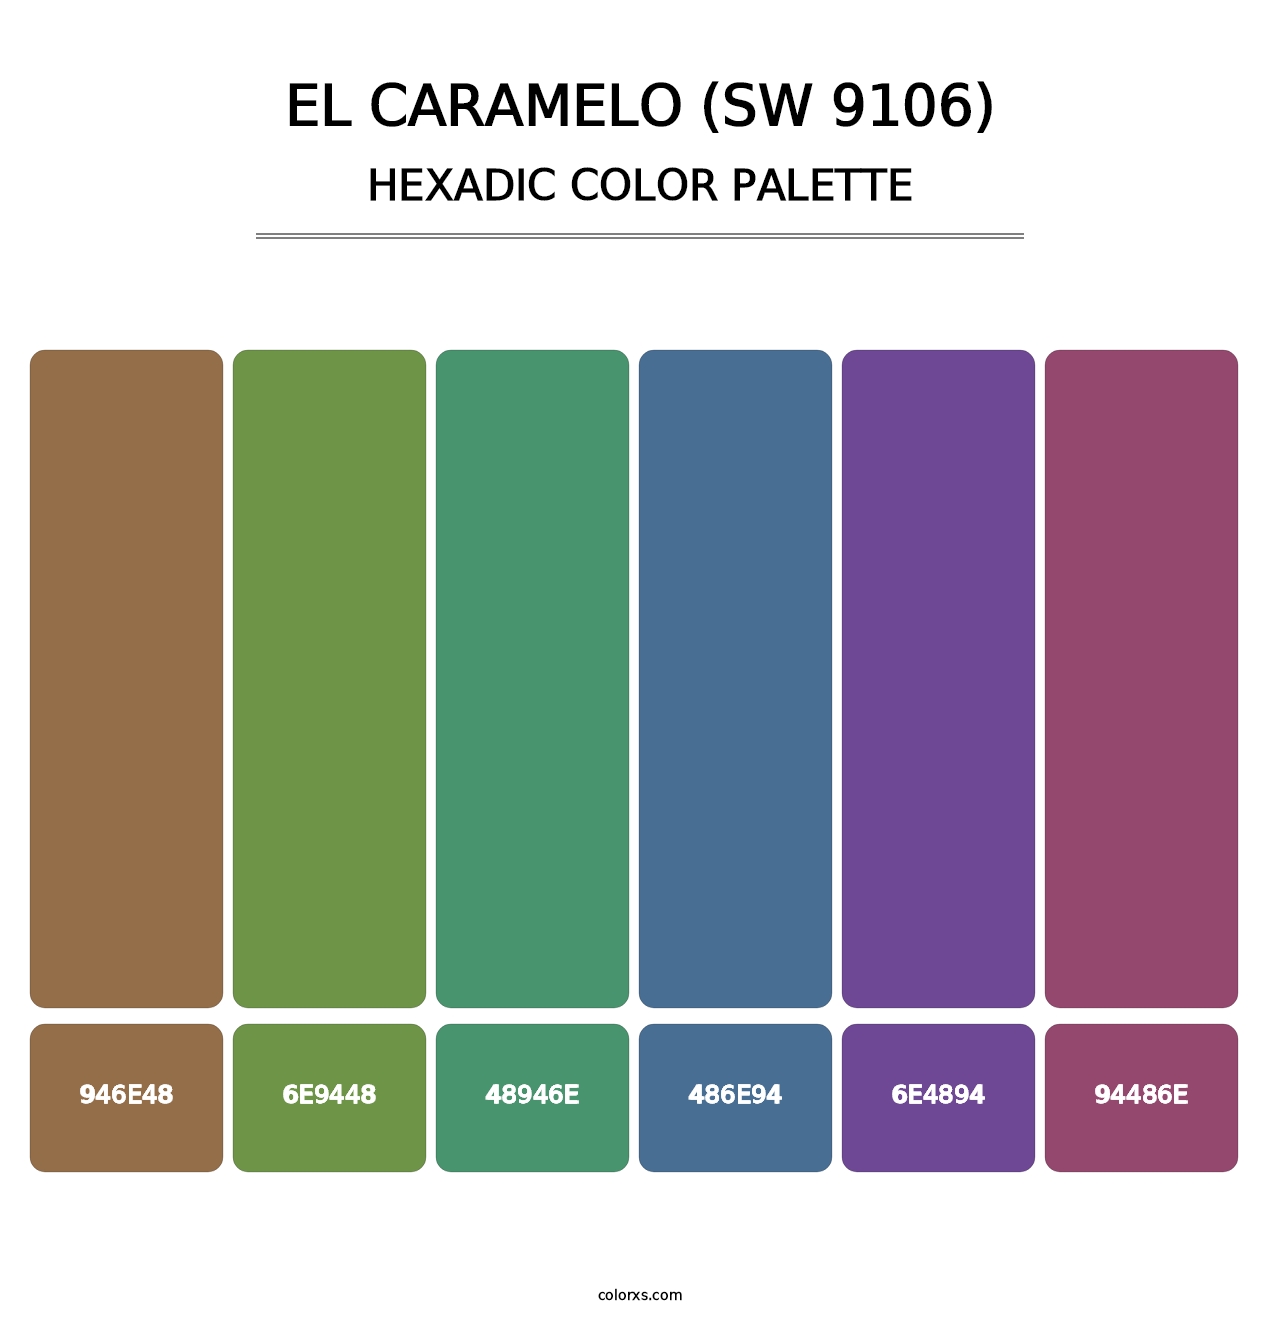 El Caramelo (SW 9106) - Hexadic Color Palette